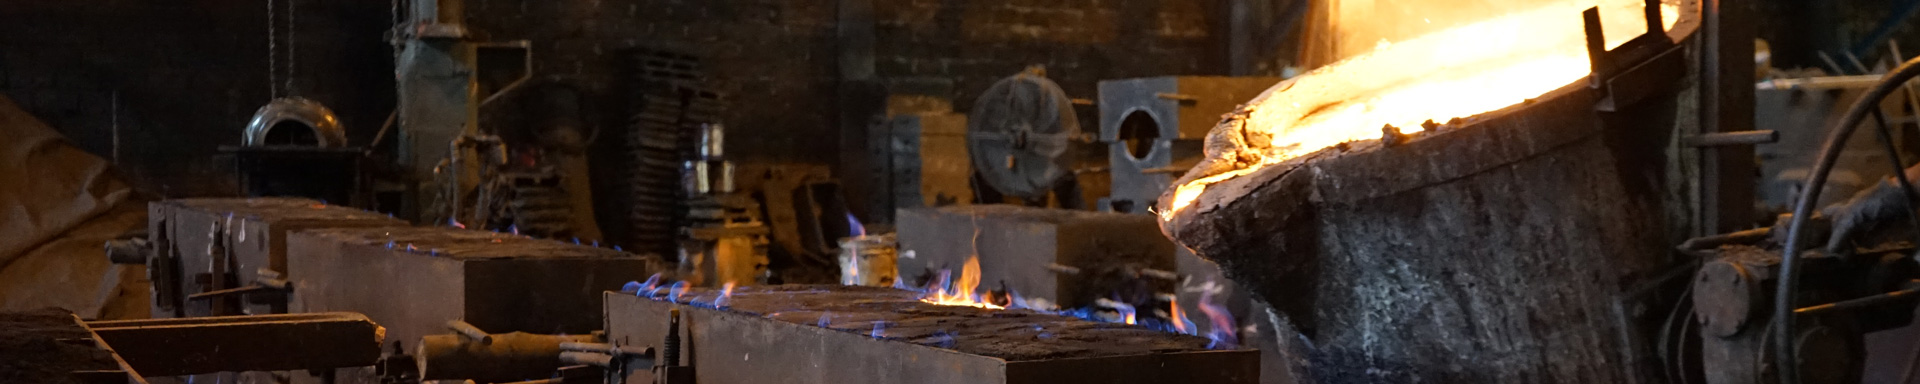 custom iron casting foundry